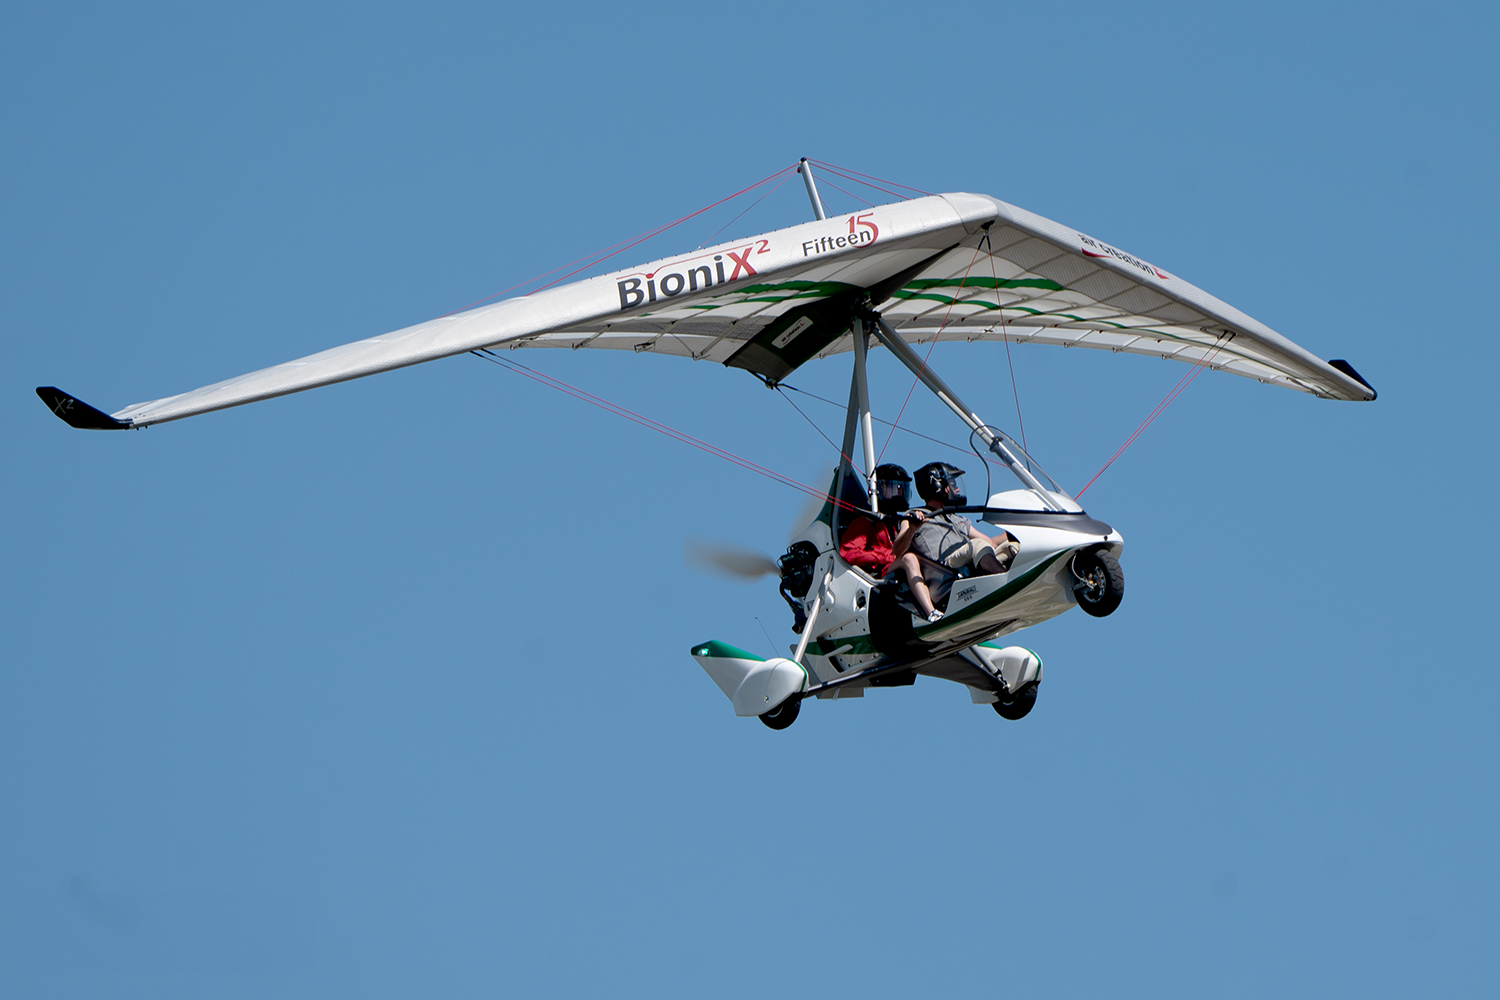 fly/en-vol-bionix2-15-tanarg-neo-product-ulm-pendulaire-microlihgt-ultralight-trike-wing-9.png